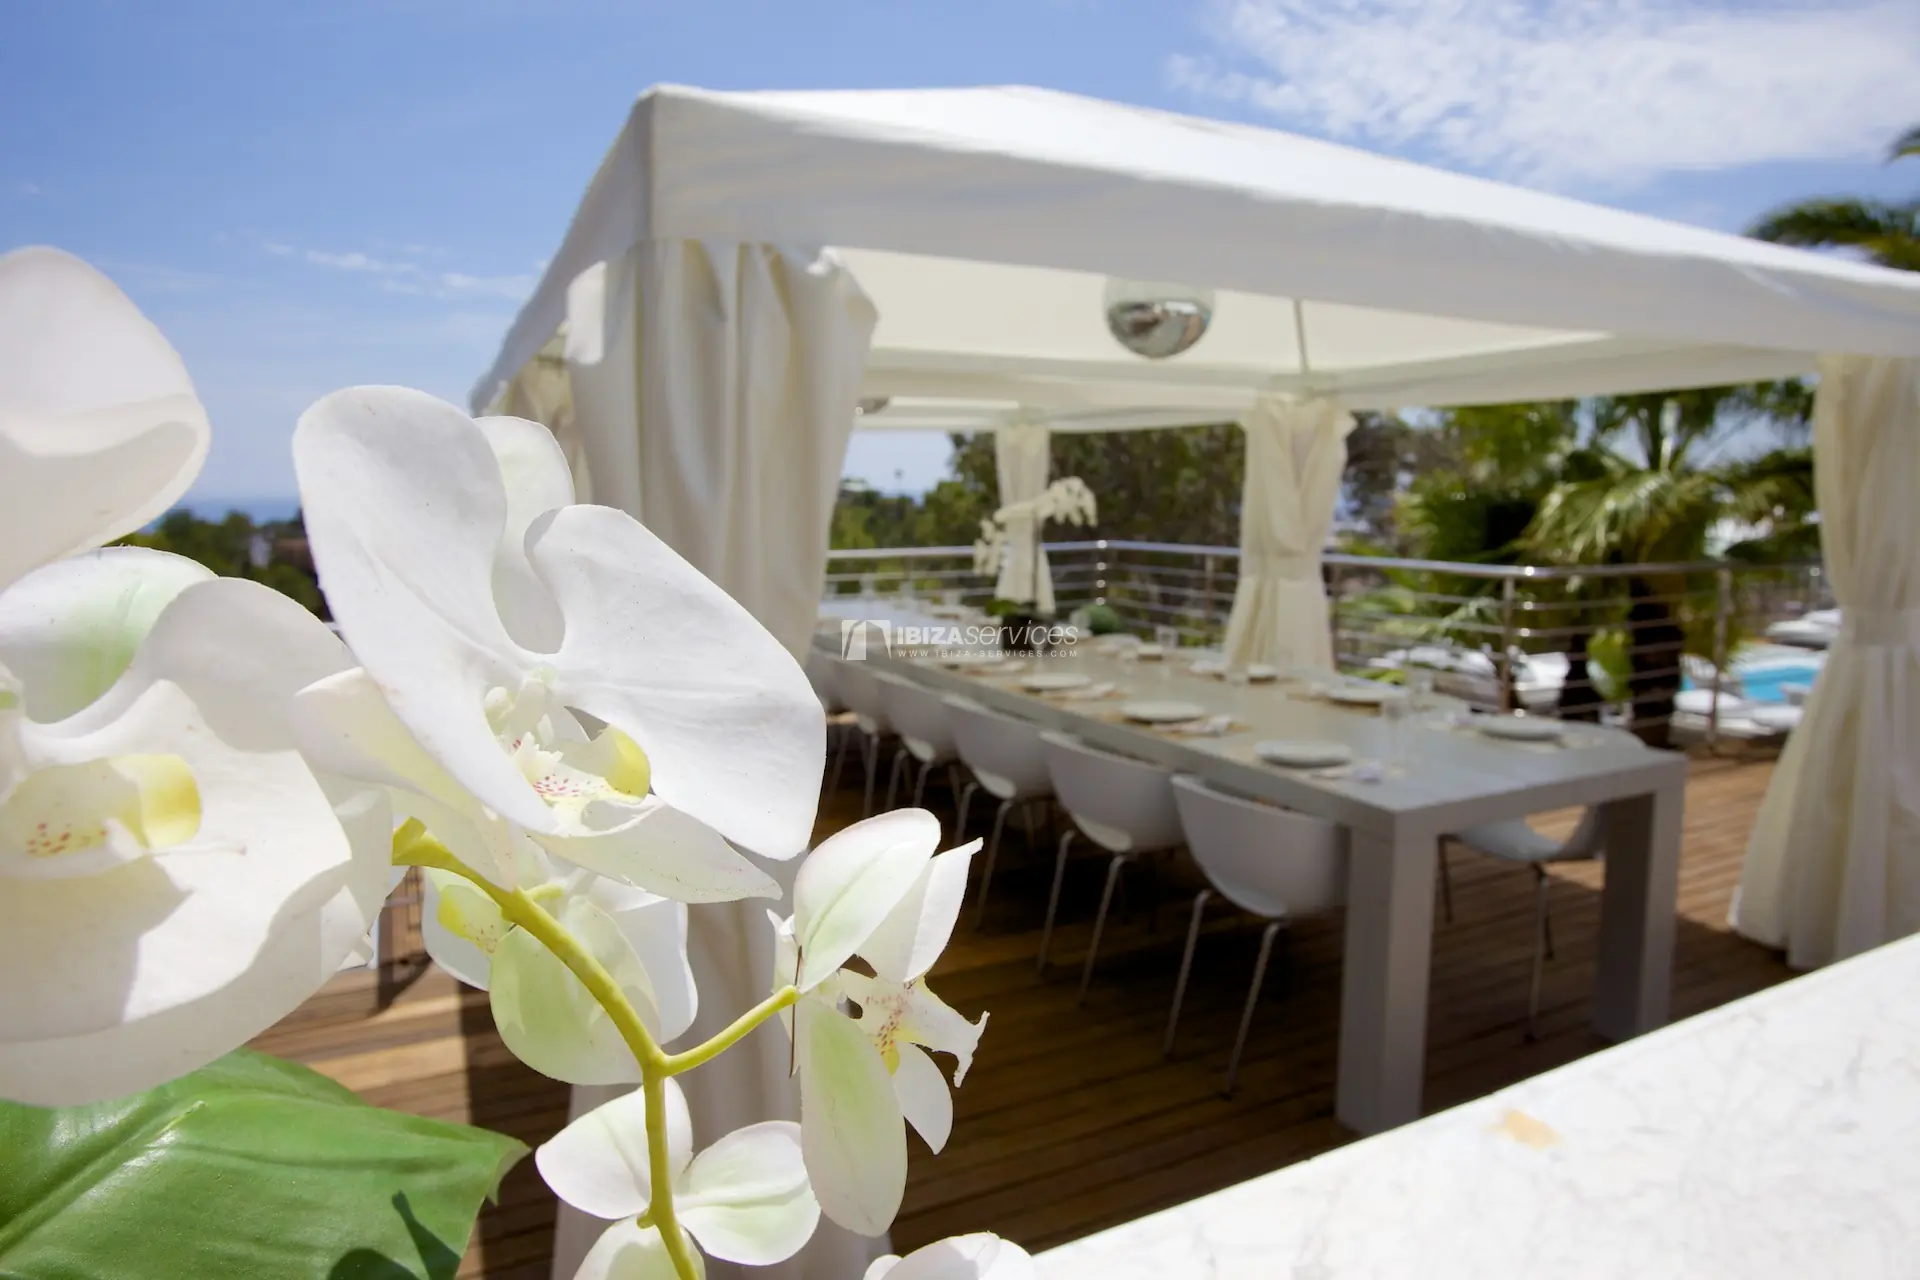 Luxueuse villa de 9 chambres à louer proche de Ibiza